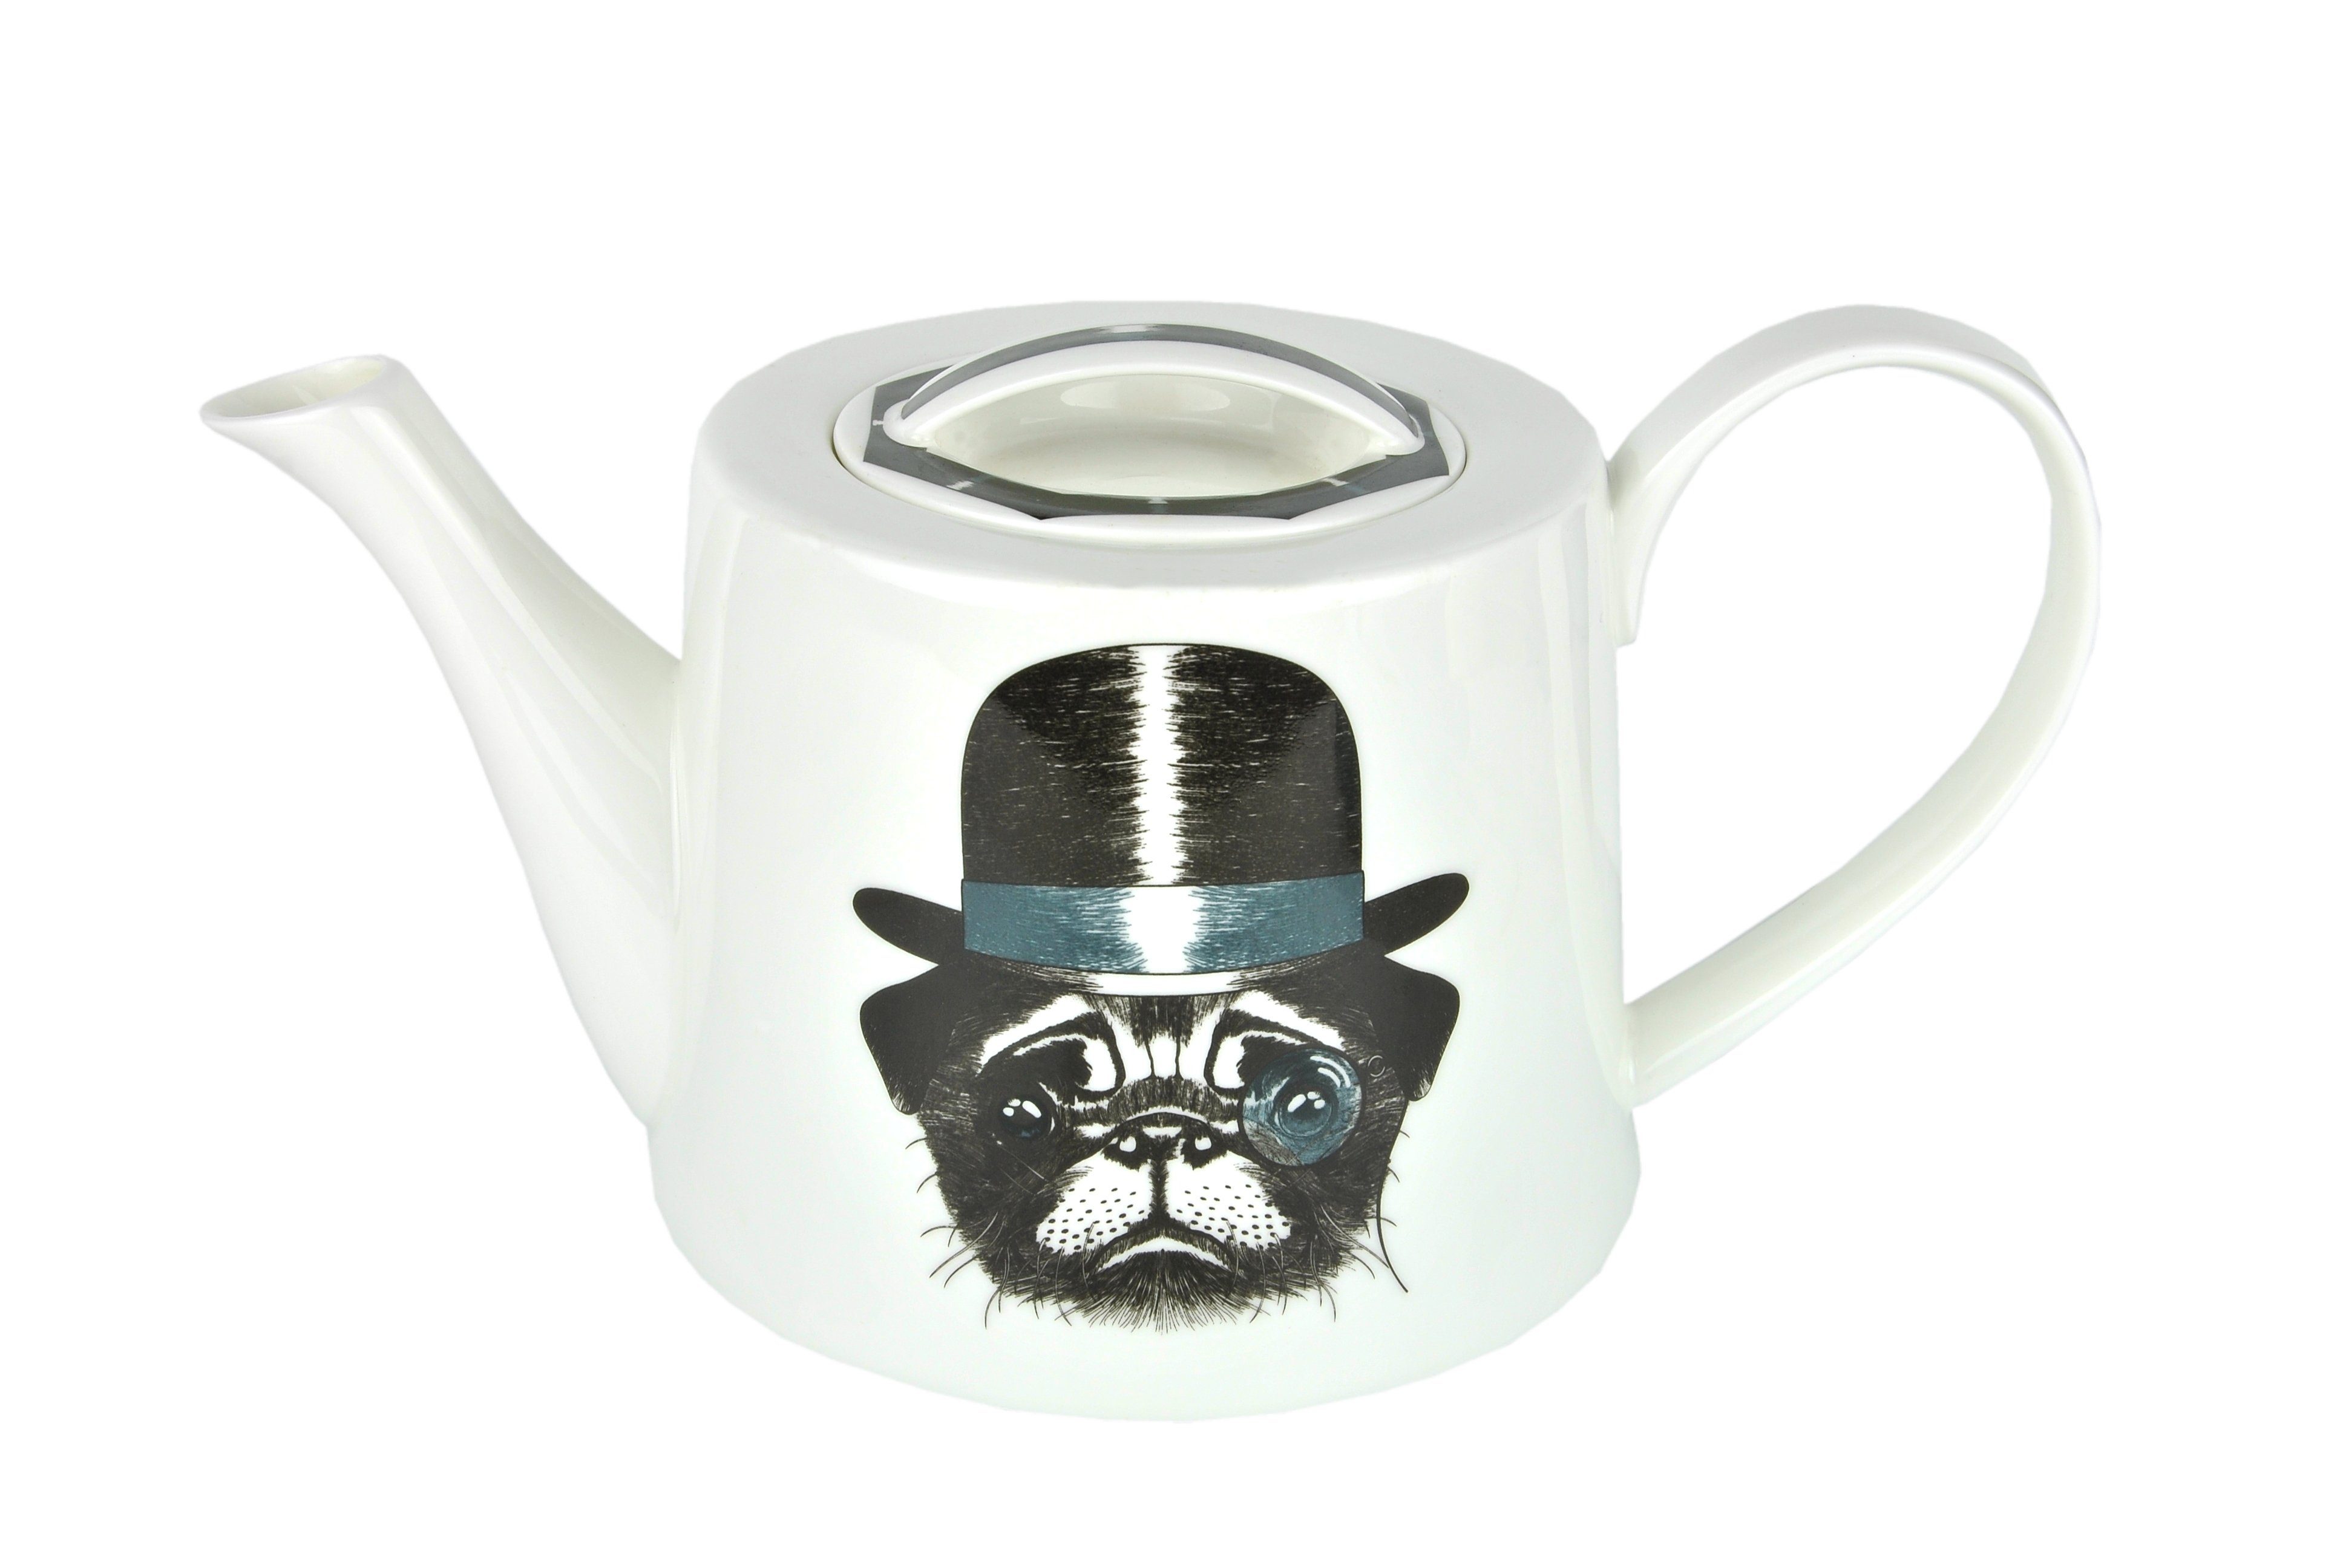 MamboCat Teetassen Teekanne 2 3-tlg. mit Hut mit Hund & Teekanne Tee-Set Tailor Jameson